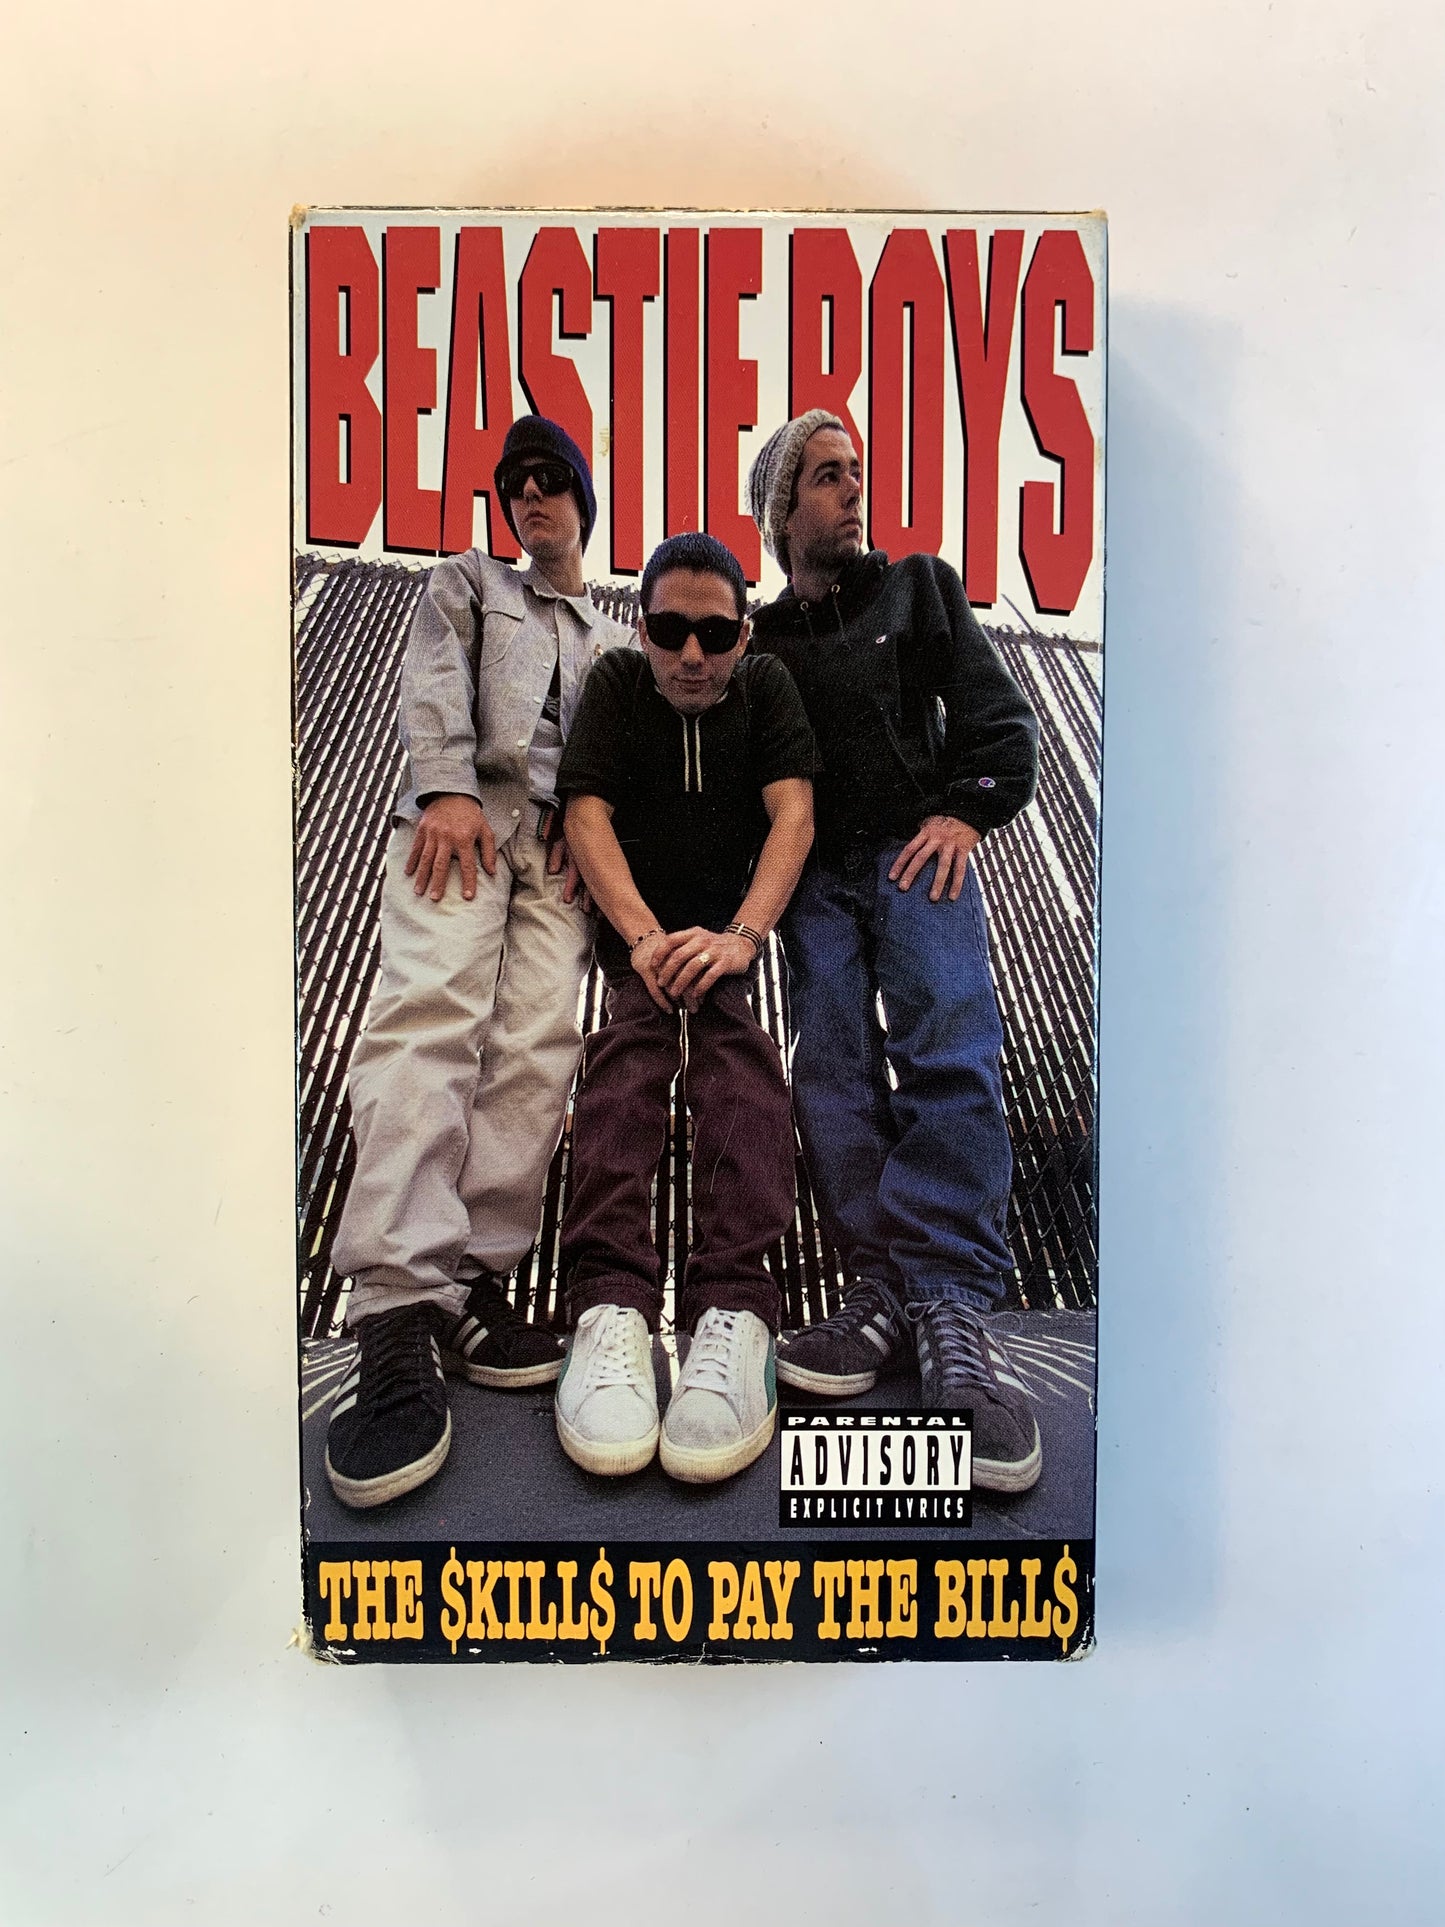 Beastie Boys, The Skills to Pay the Bills